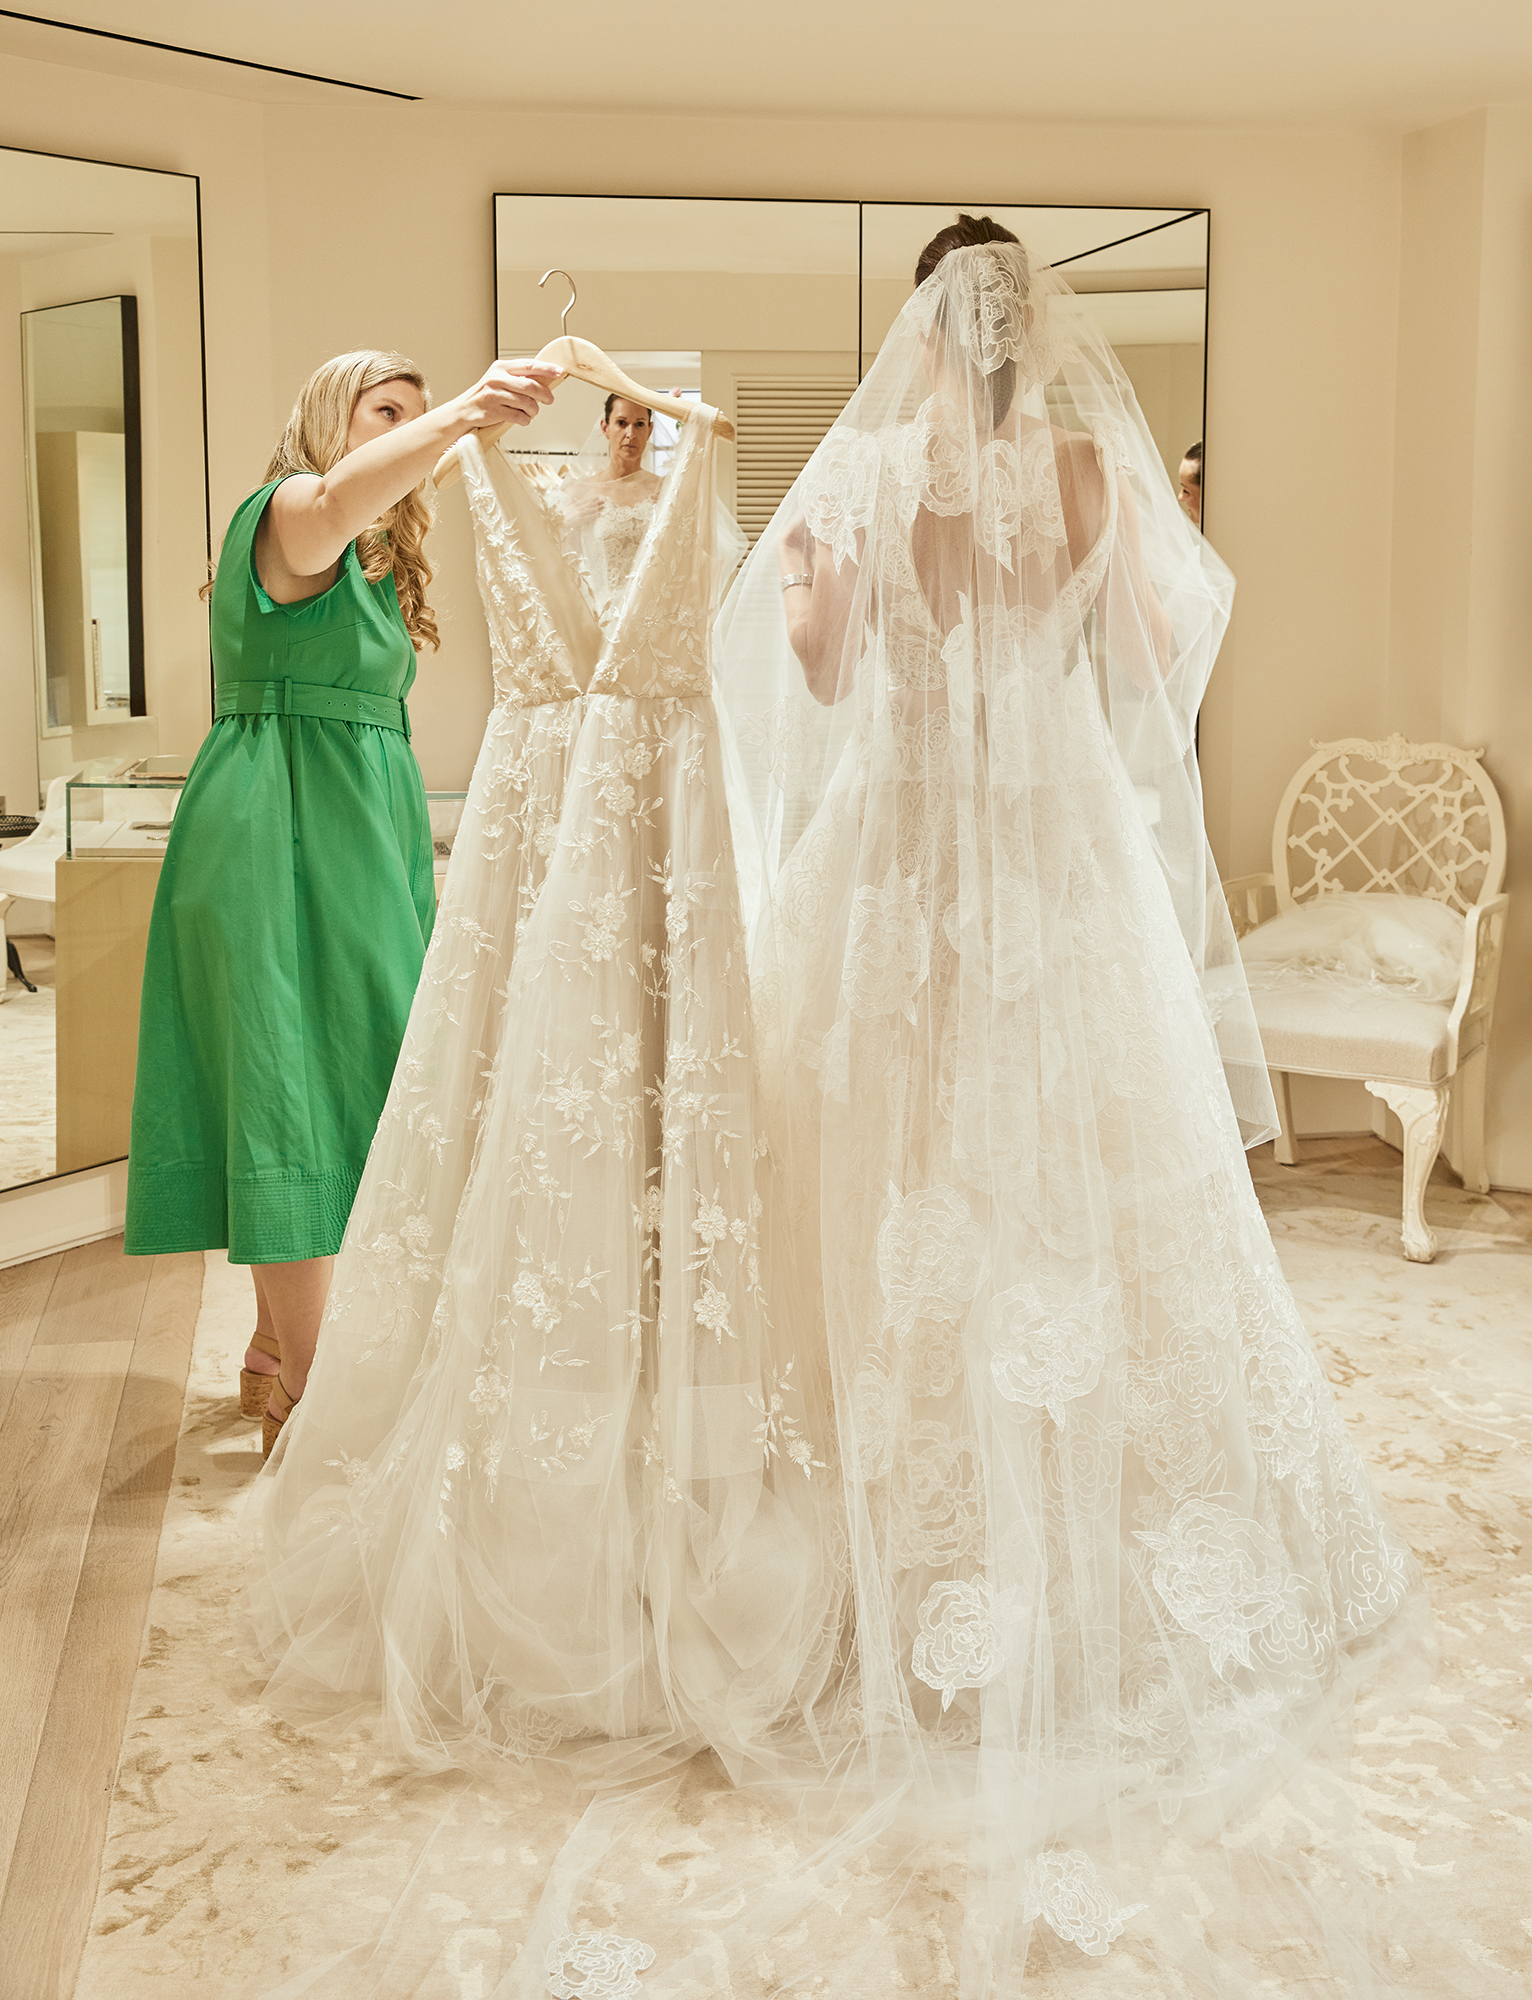 Julie Sabatinos 5 Tips For Choosing A Wedding Dress You Love The Stylish Bride 6645